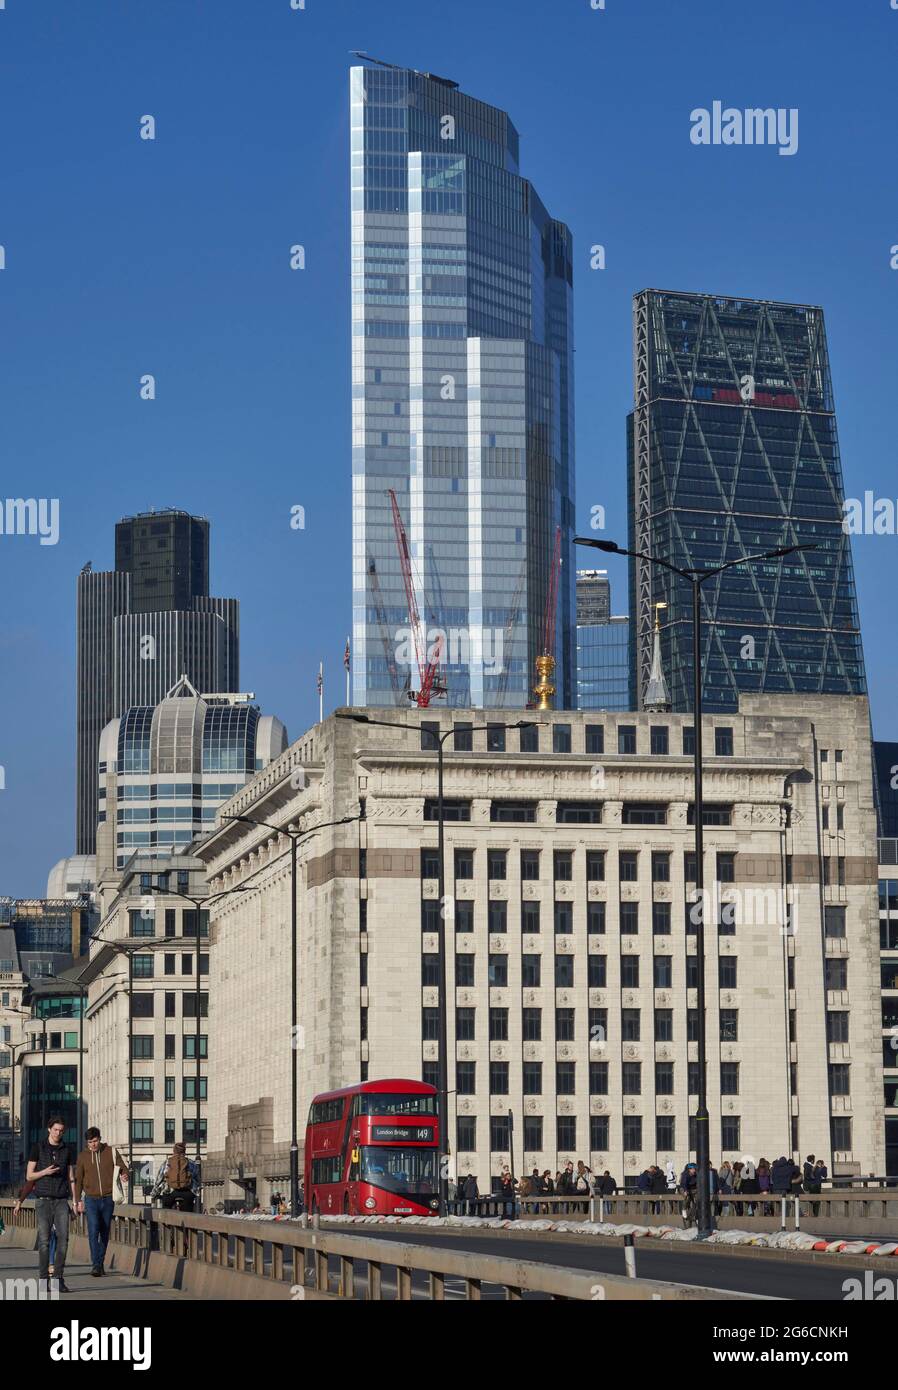 View from London bridge. 22 Bishopsgate, LONDON, United Kingdom. Architect: PLP Architecture, 2020. Stock Photo